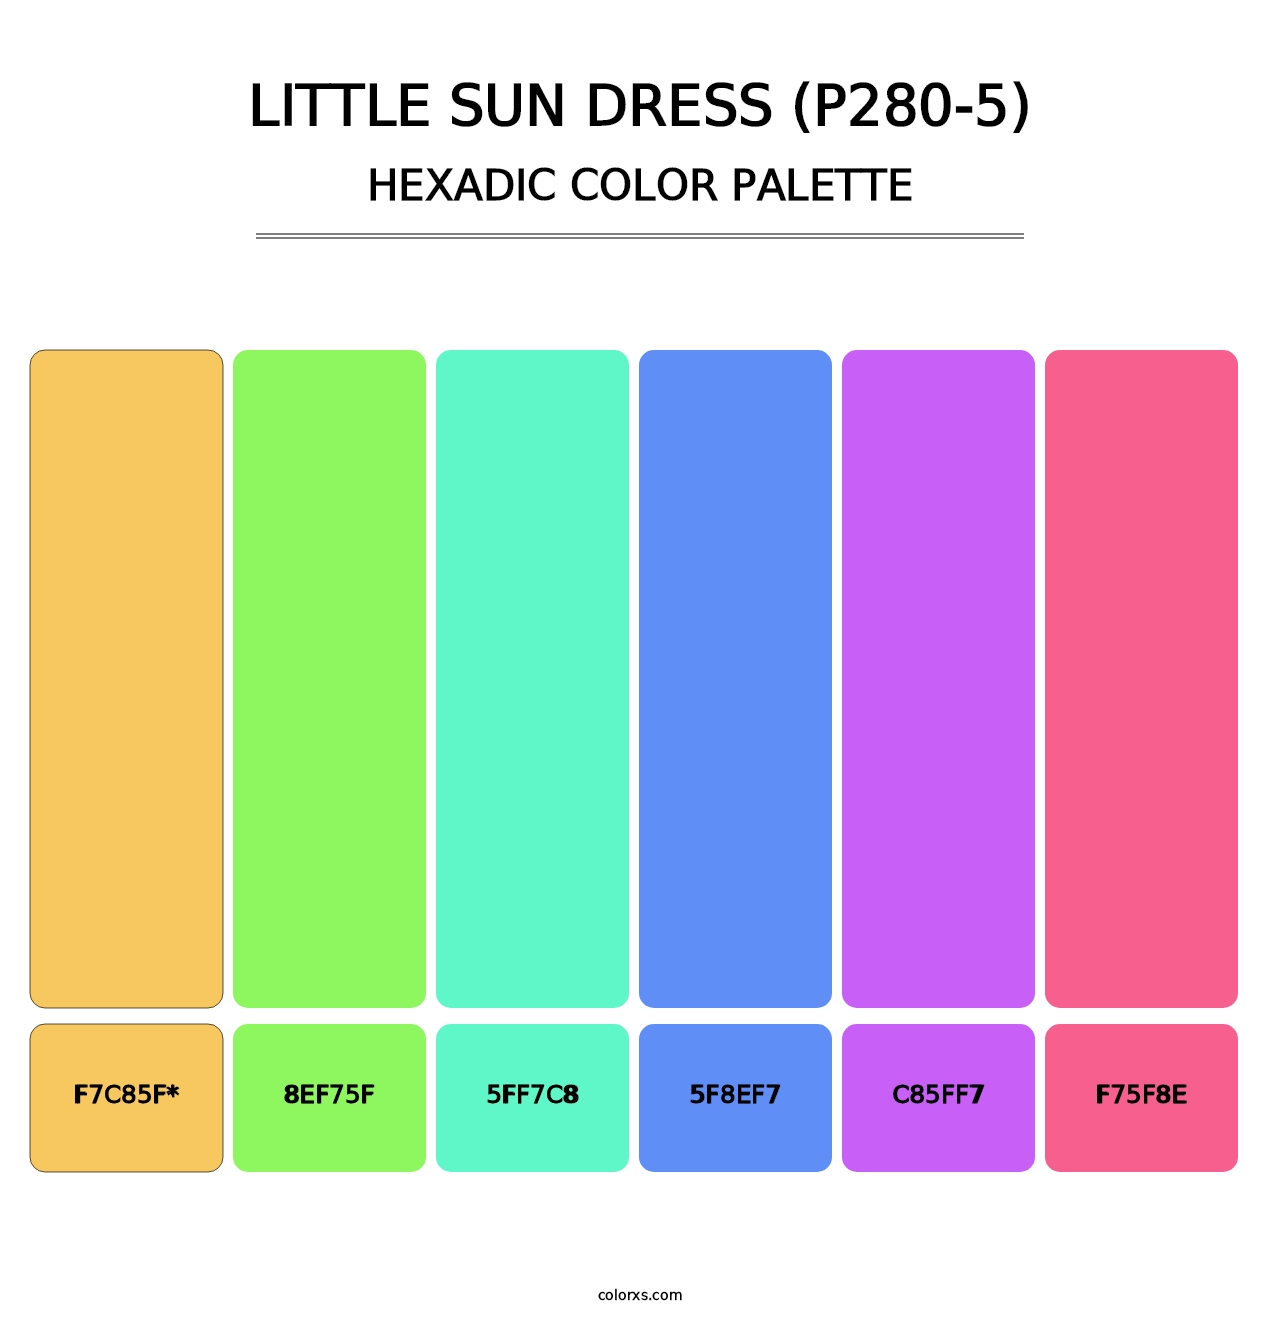 Little Sun Dress (P280-5) - Hexadic Color Palette